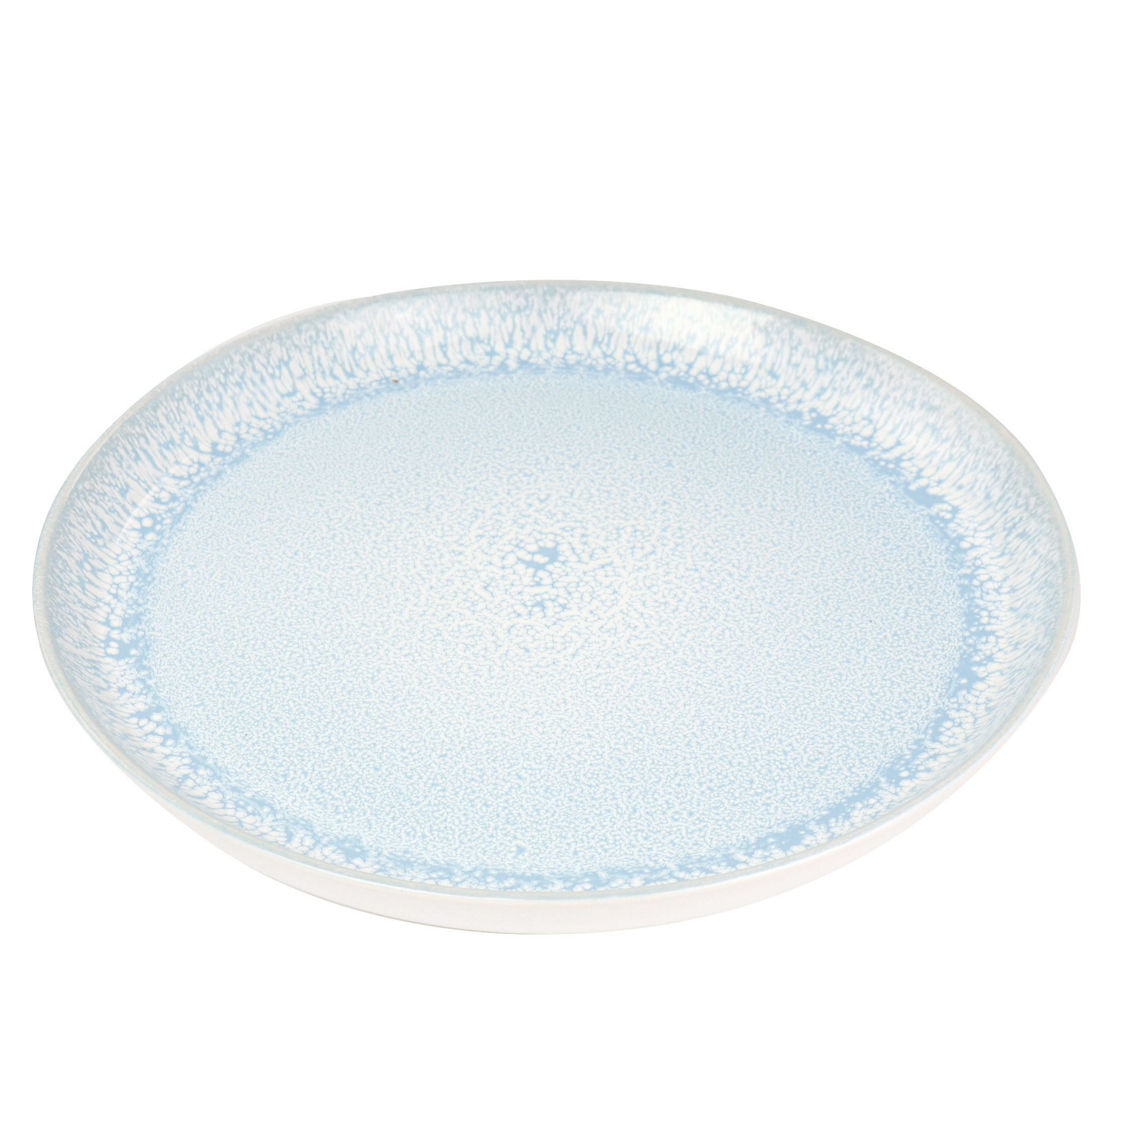 Elama Mocha 16 Piece Stoneware Dinnerware Set in Blue - Image 2 of 5